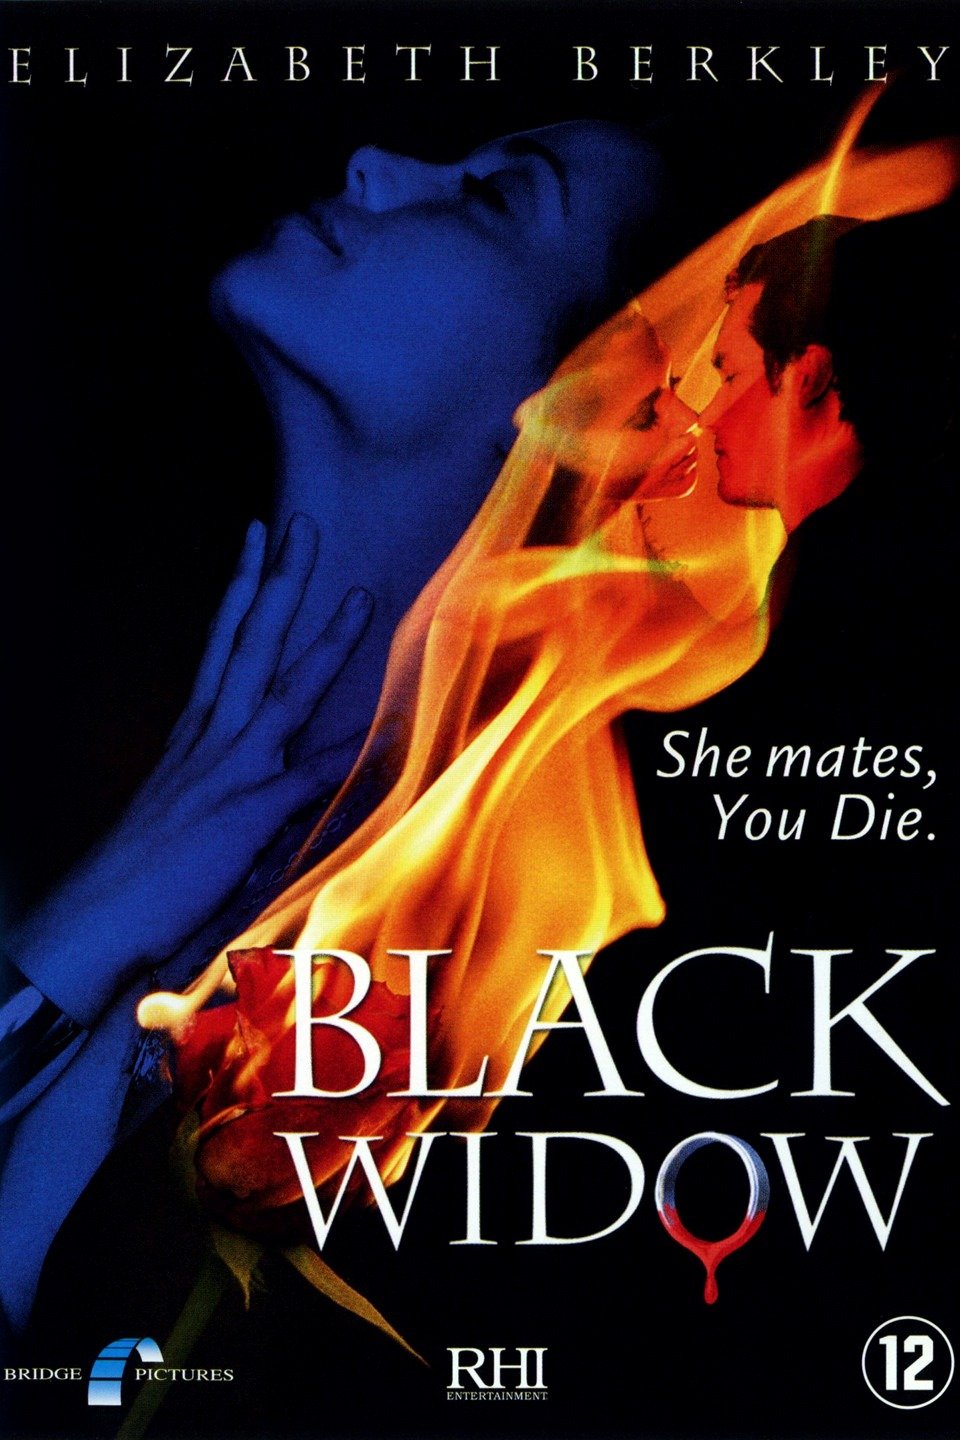 Вдова 2008. Черная вдова 2008. Черная вдова Элизабет Беркли. Black Widow 2008.